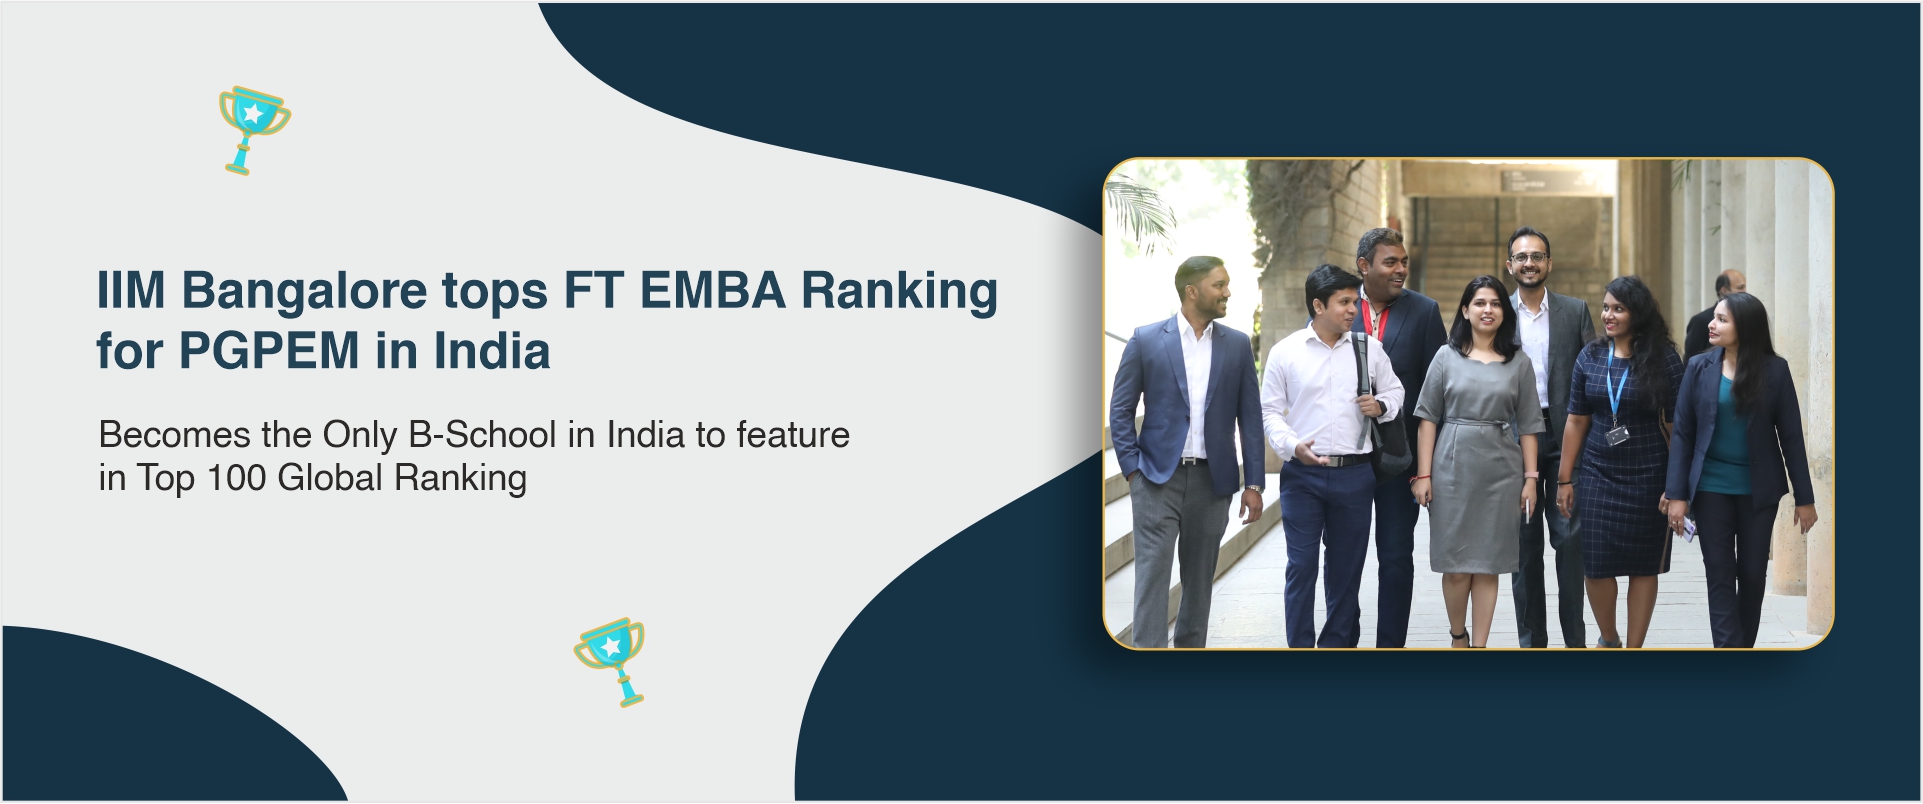   IIM Bangalore tops FT EMBA Ranking in India